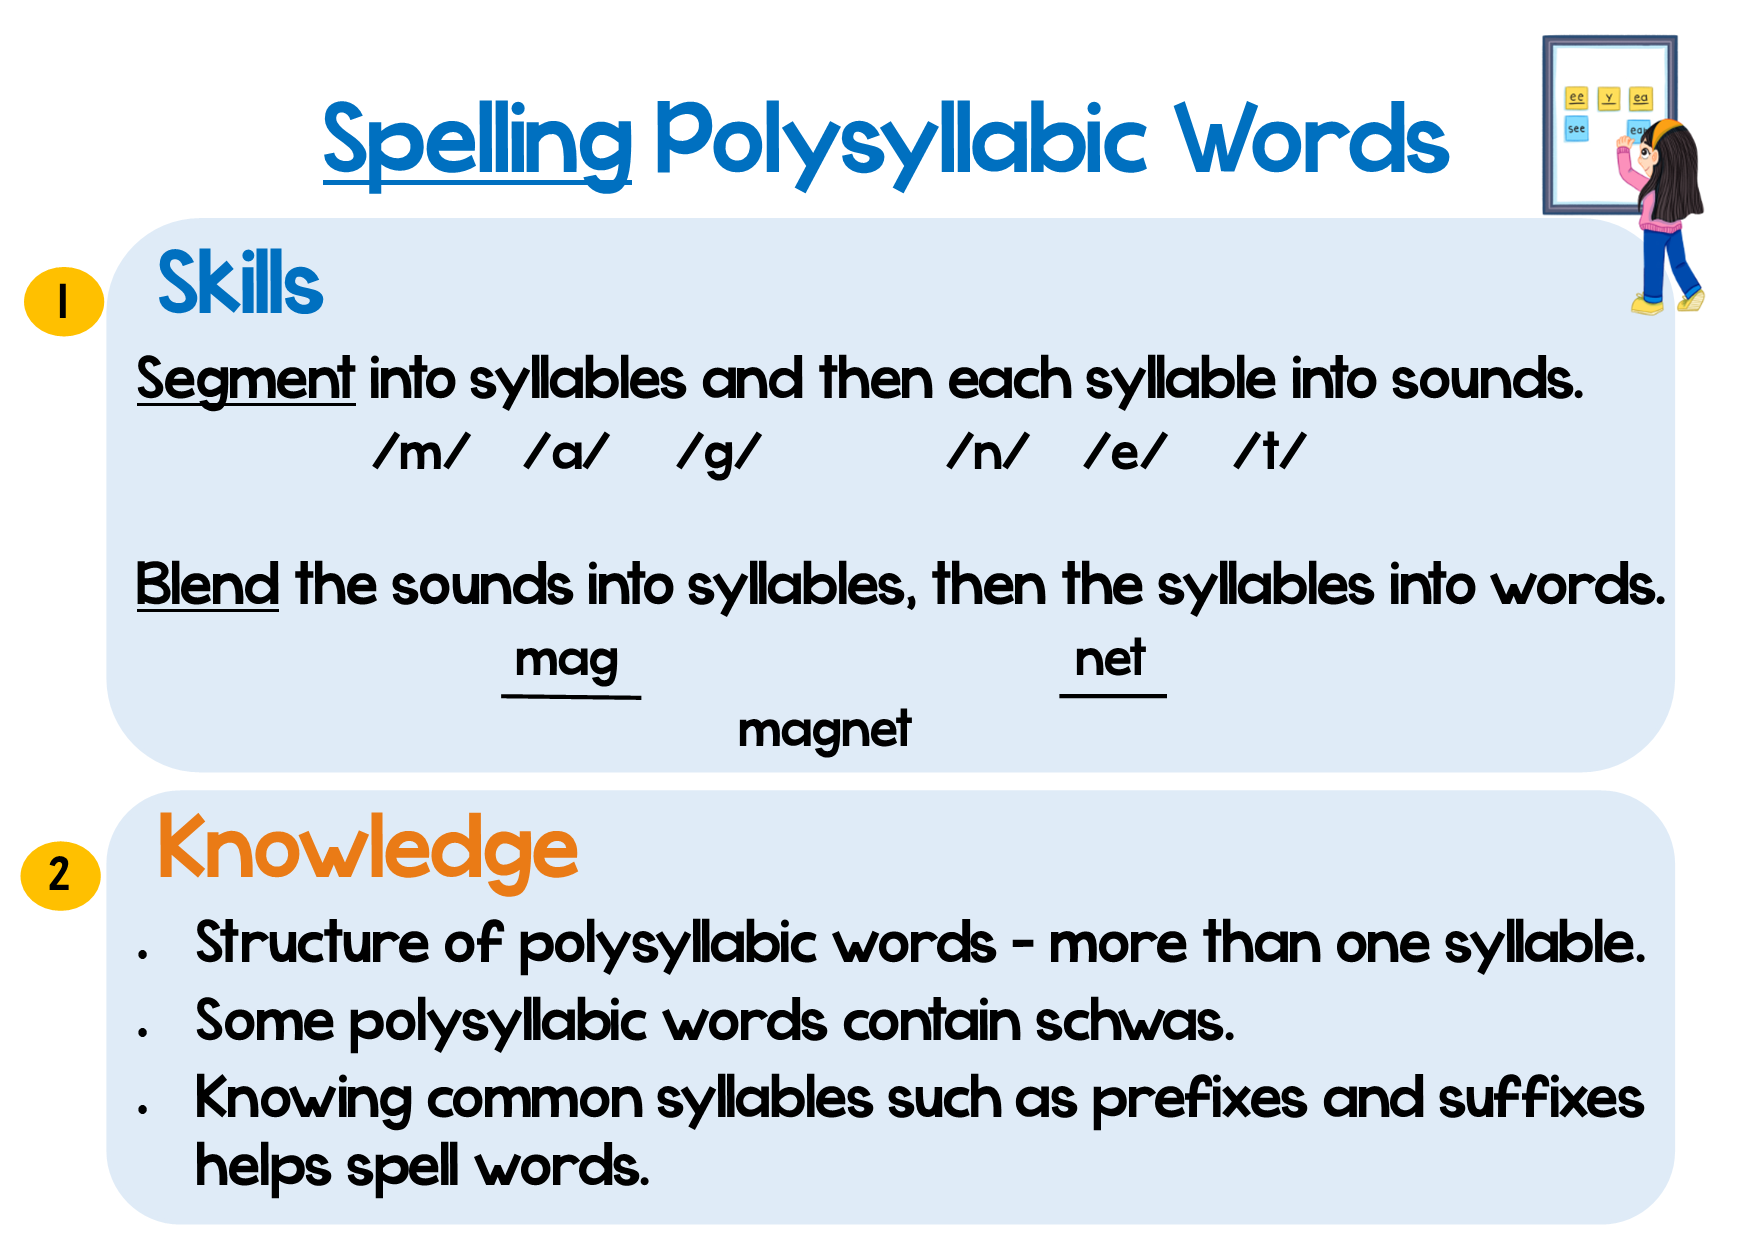 Spelling Polysyllabic Words.png